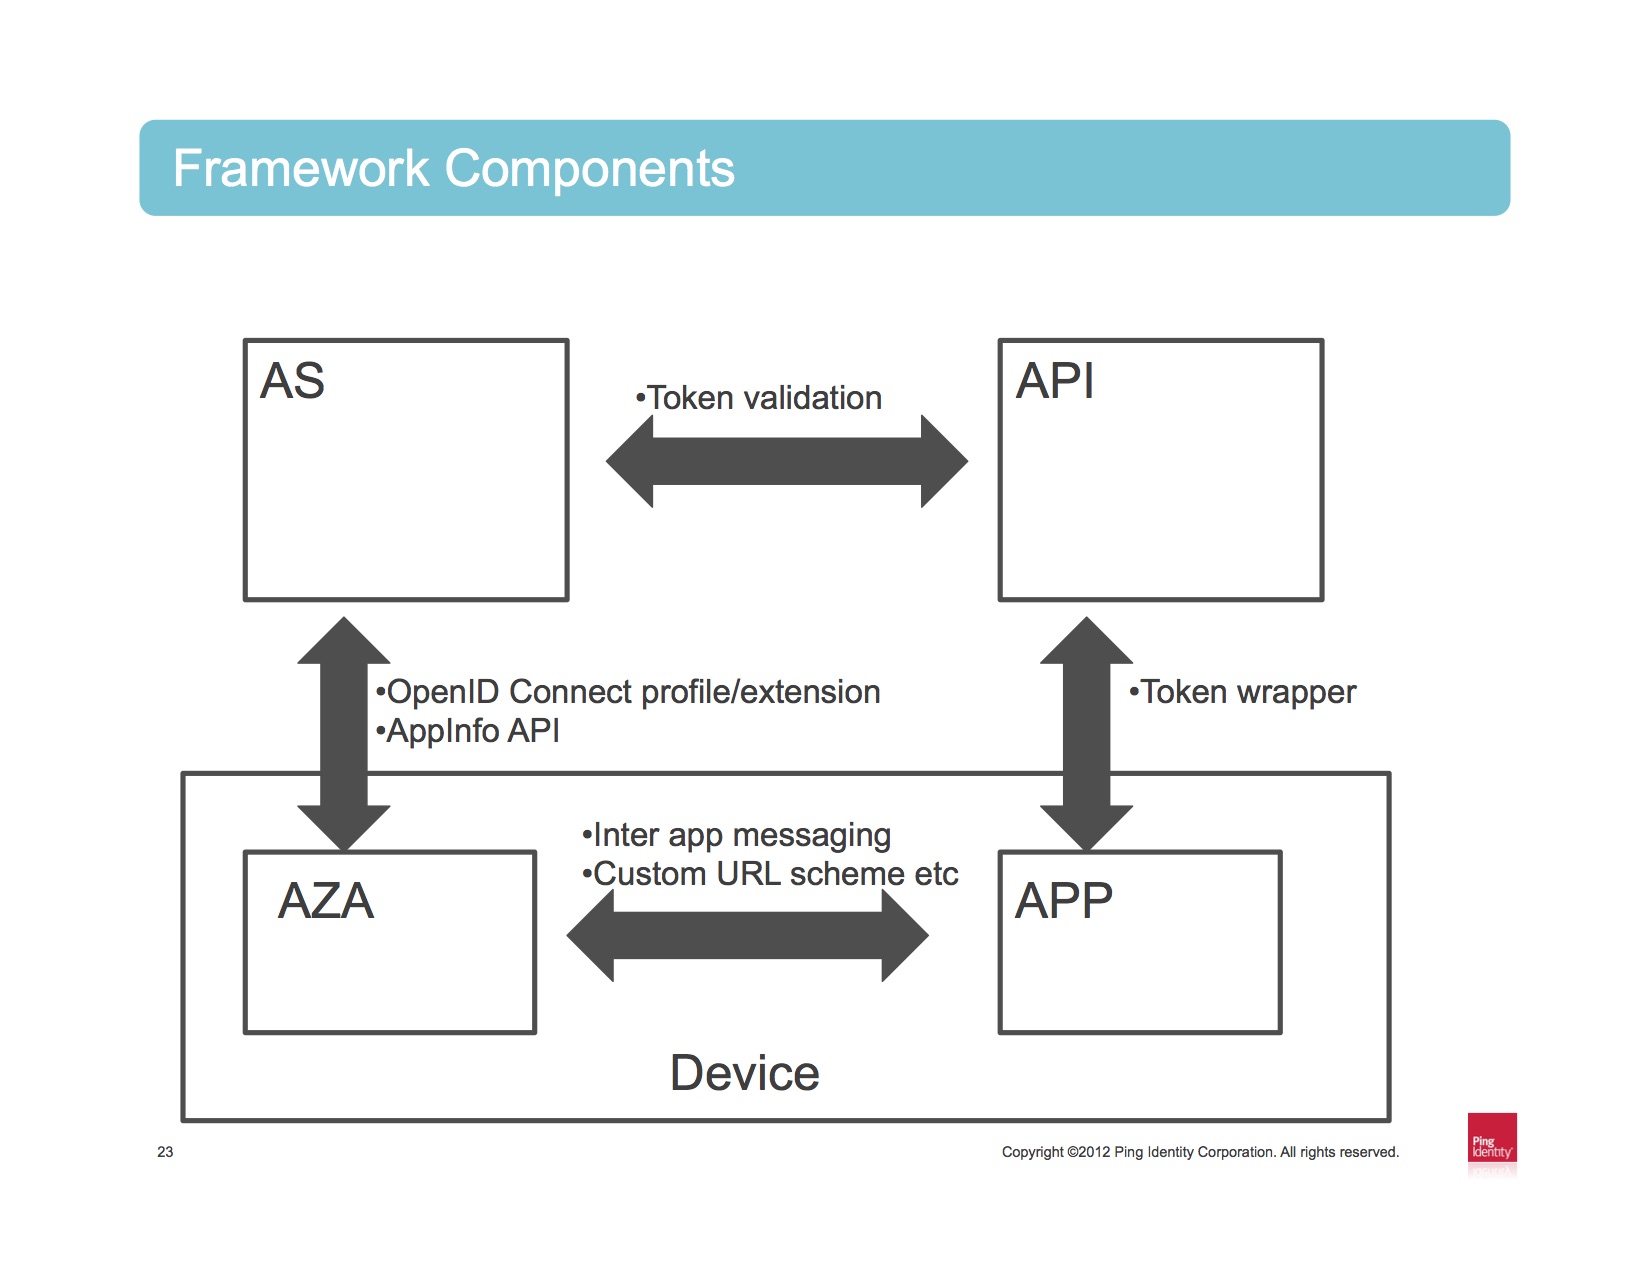 Slide 23_Framework Components_Ping Identity